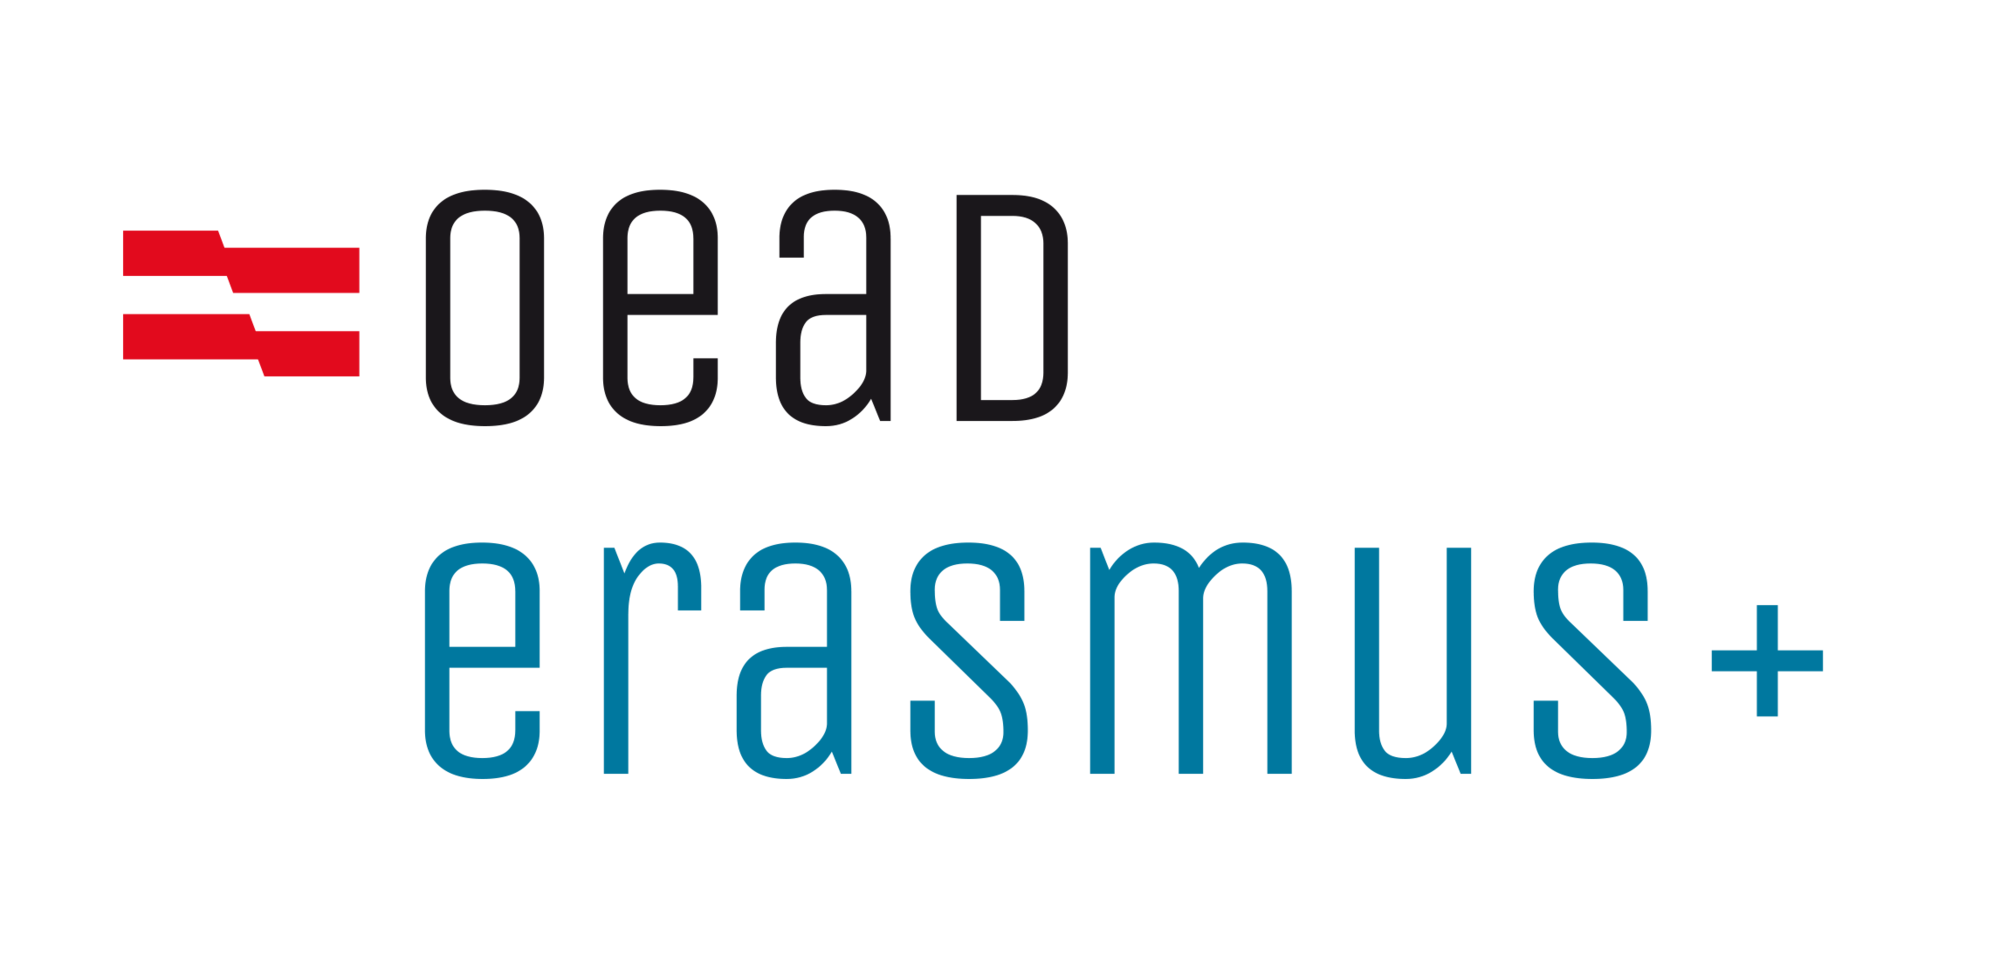 OeAD_LogoKompakt_Erasmus__RGB